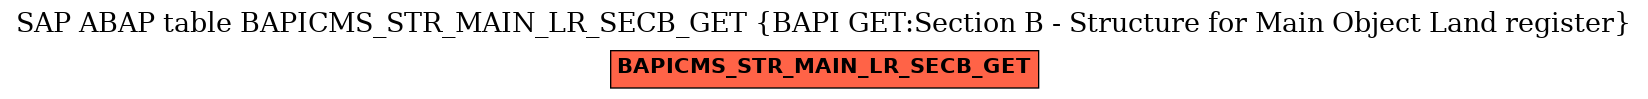 E-R Diagram for table BAPICMS_STR_MAIN_LR_SECB_GET (BAPI GET:Section B - Structure for Main Object Land register)